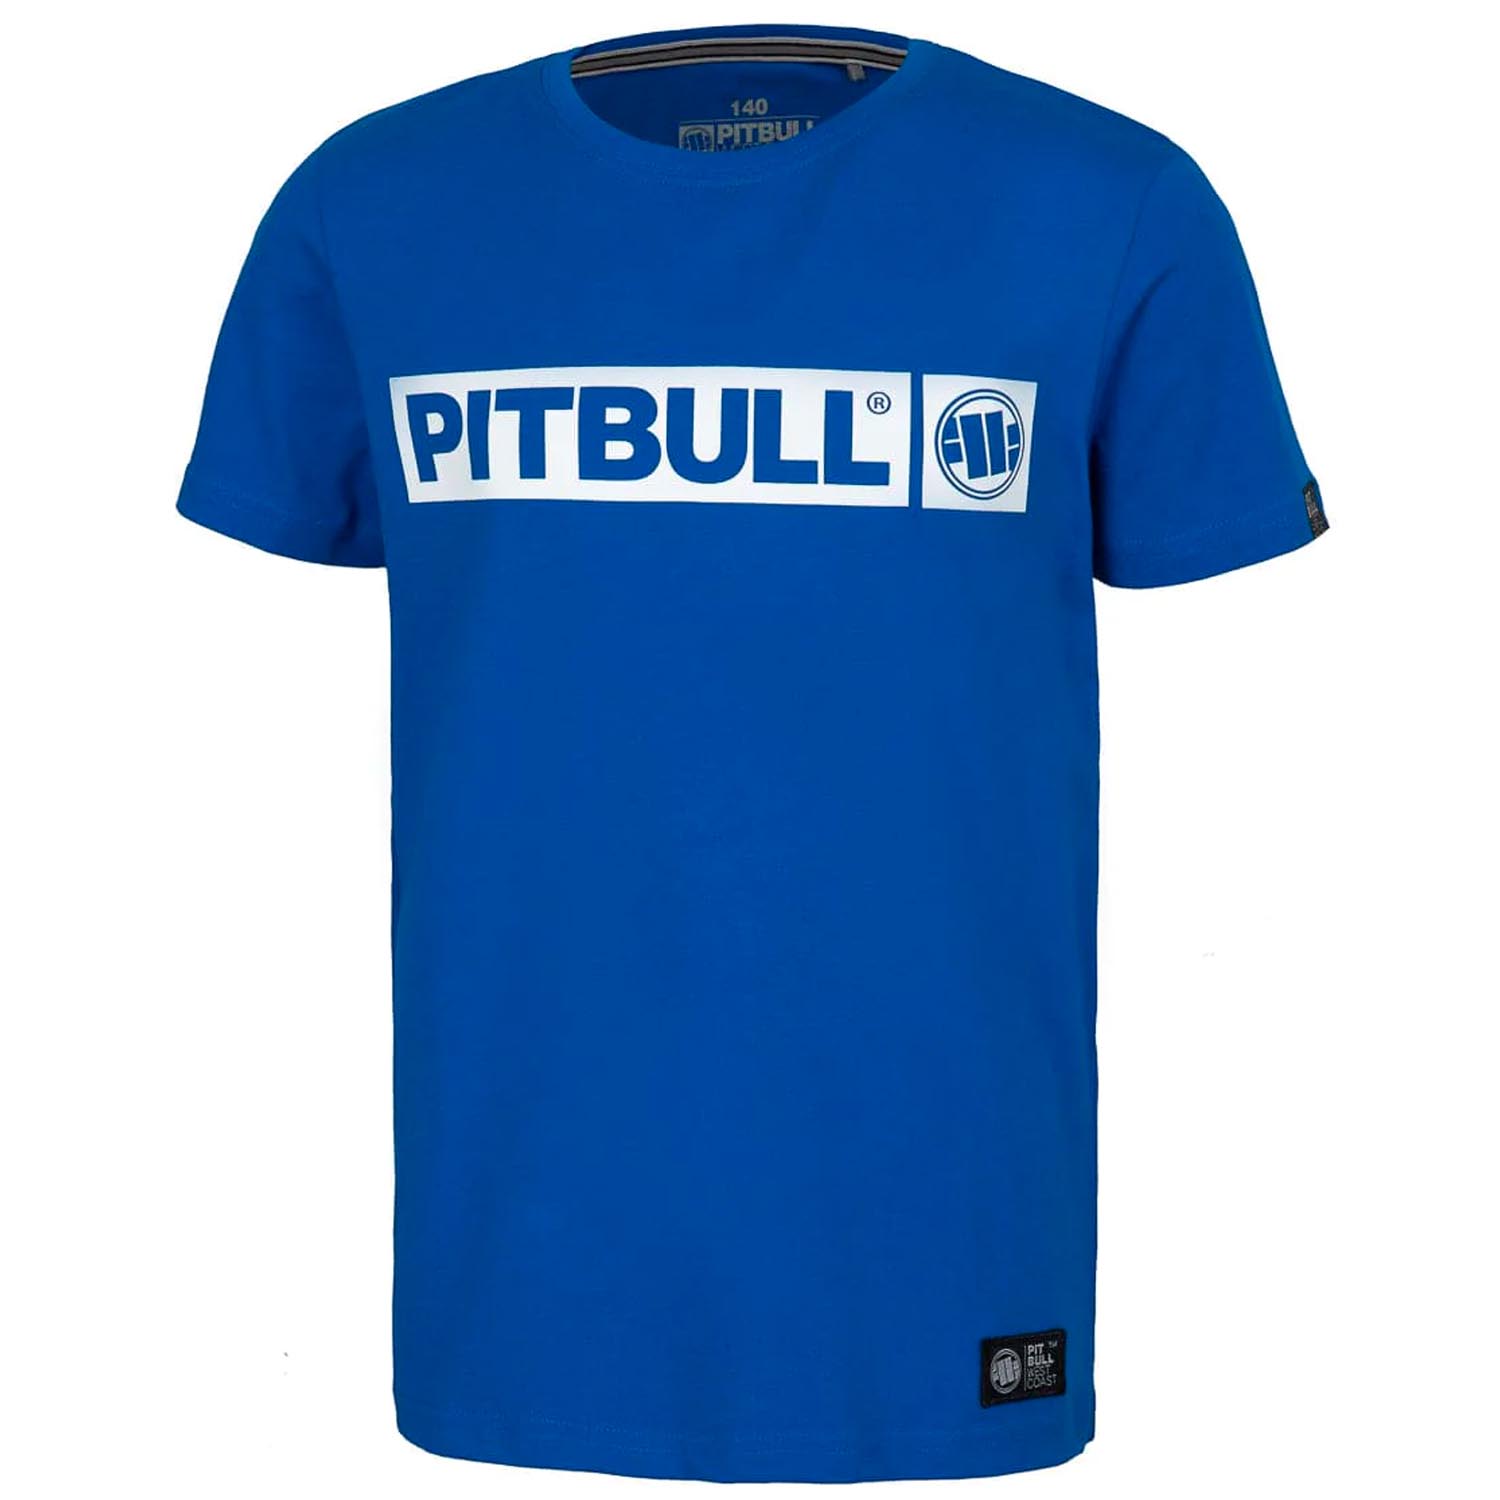 Pit Bull West Coast T-Shirt, Kids, Hilltop, blue